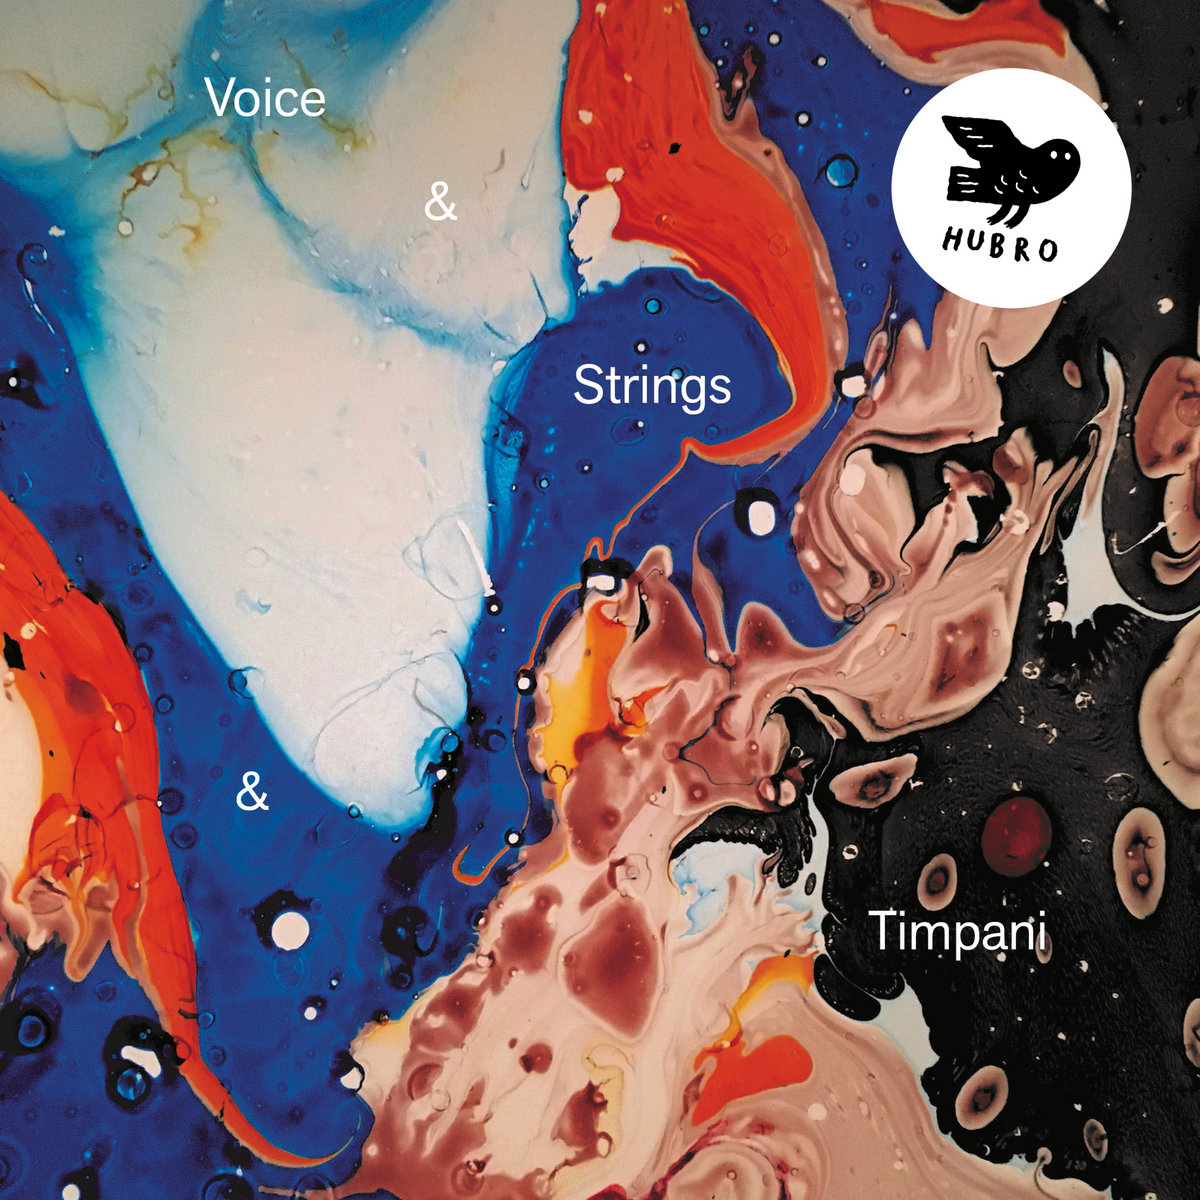 Strings & Timpani – Voice & Strings & Timpani